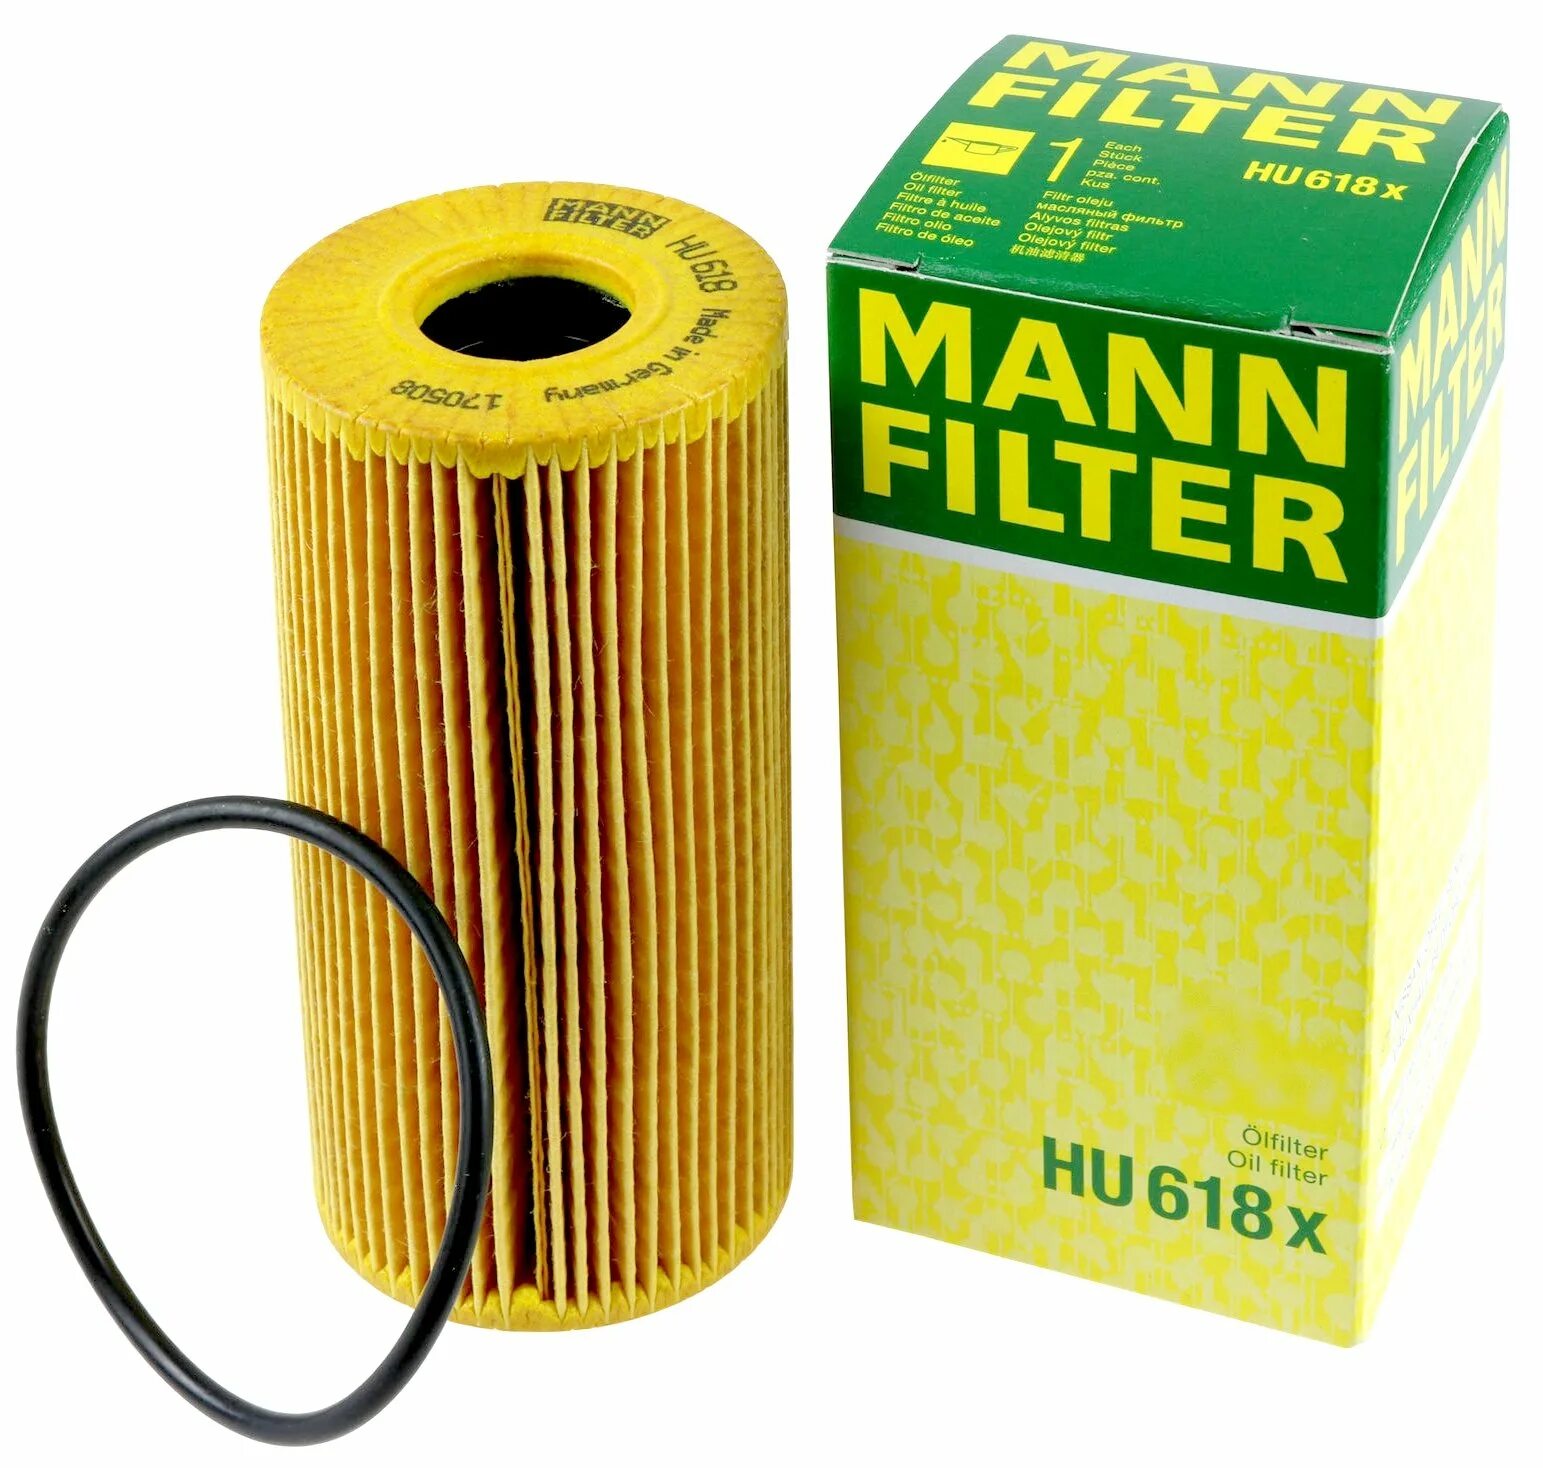 Масляный манн. Фильтр масляный Mann hu 618 x. Фильтр масляный Mann hu612х. Масляный фильтр Mann hu12110x. Фильтр масляный Mann hu9001x.